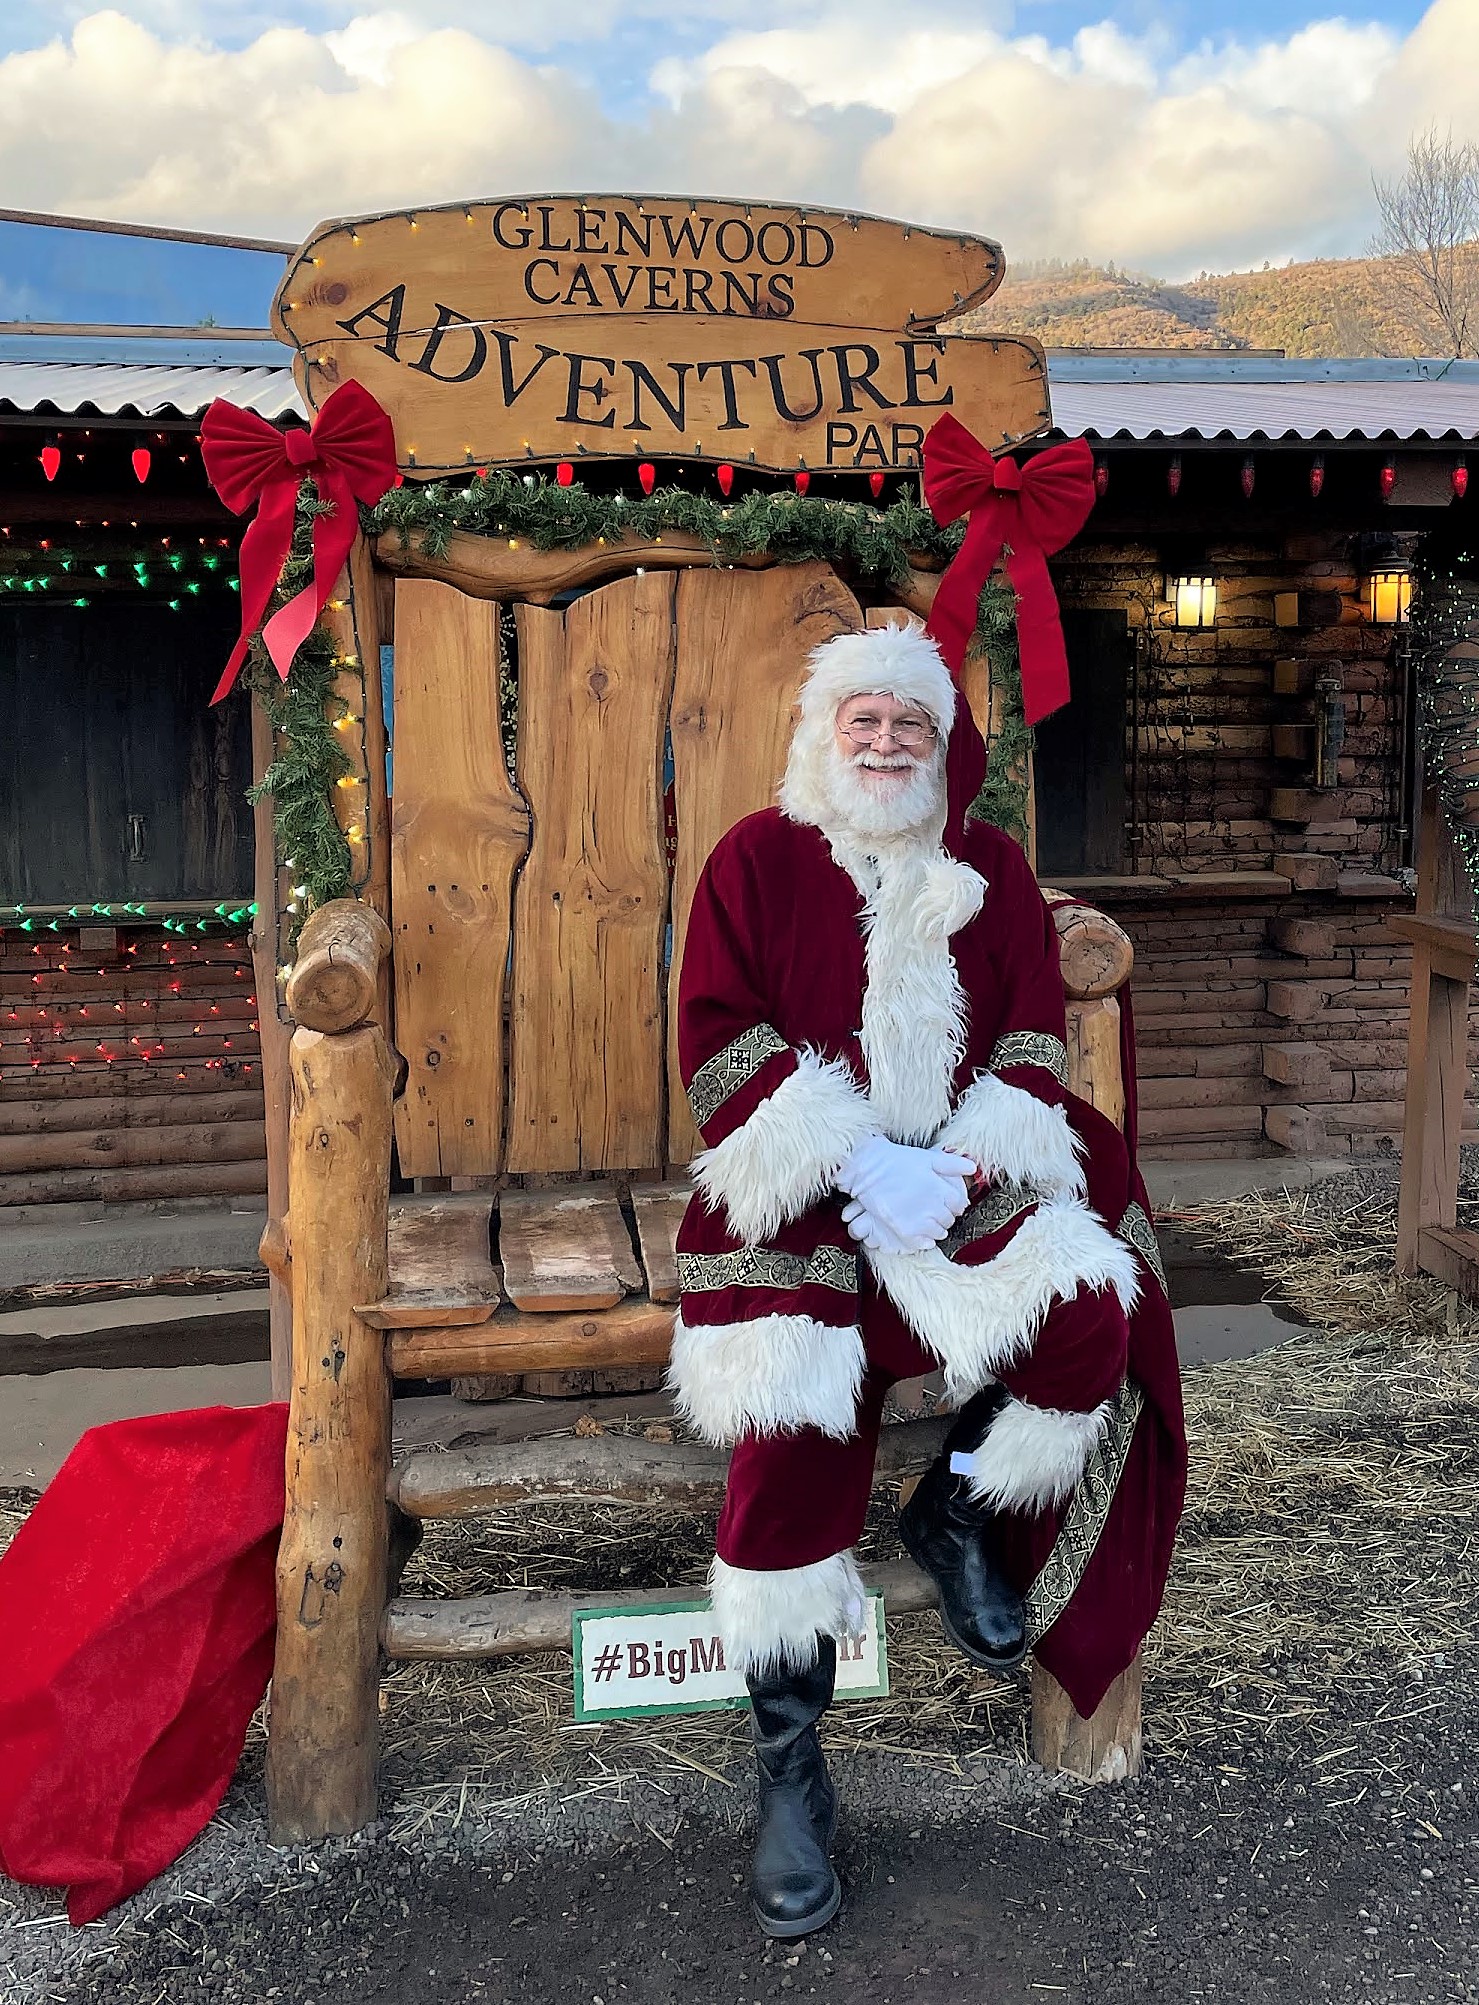 Santa at Glenwood Caverns Adventure Park